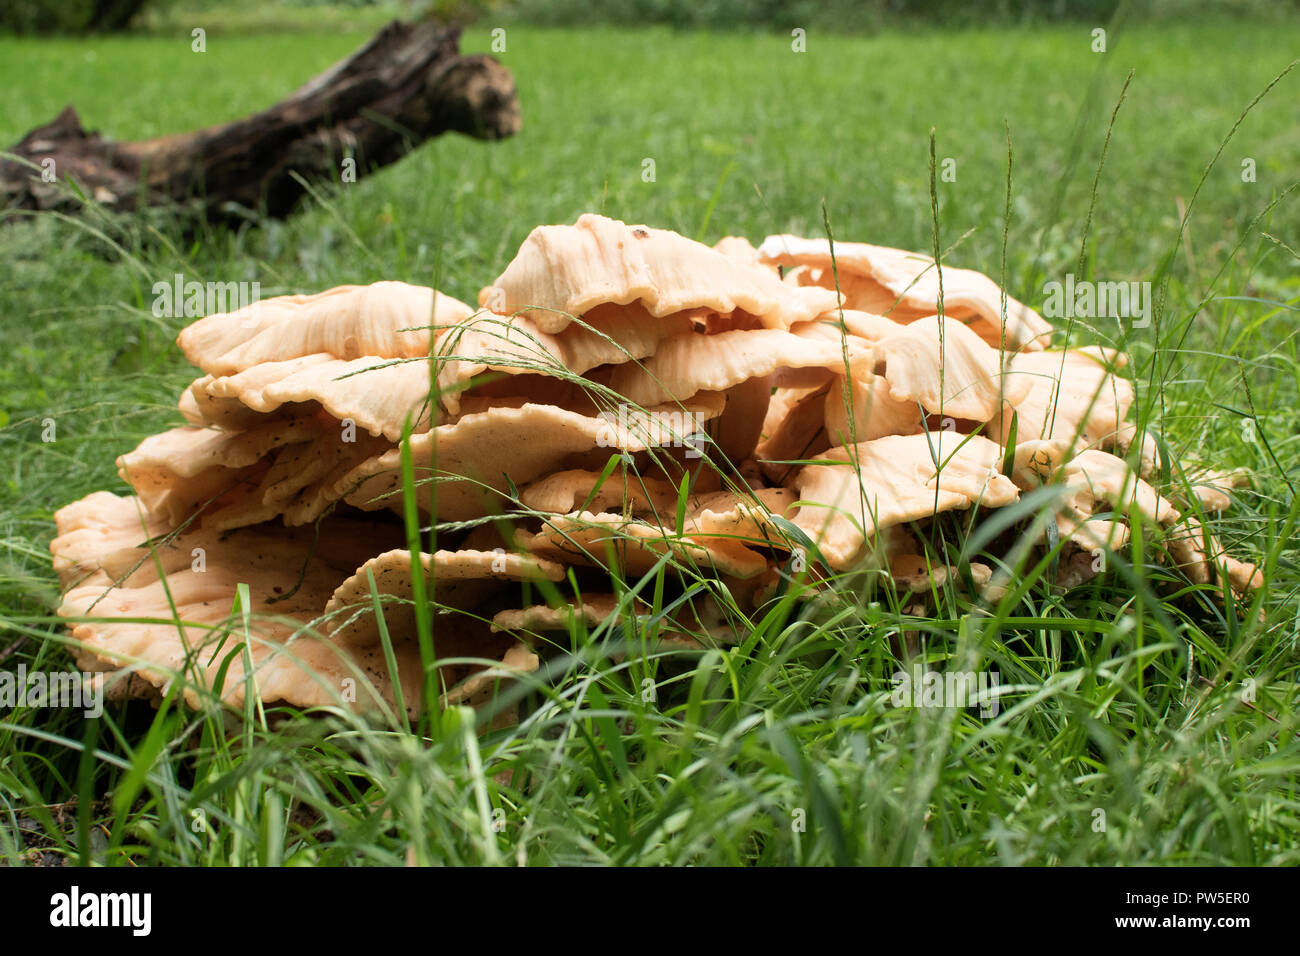 Large mushroom in grass Stock Photo